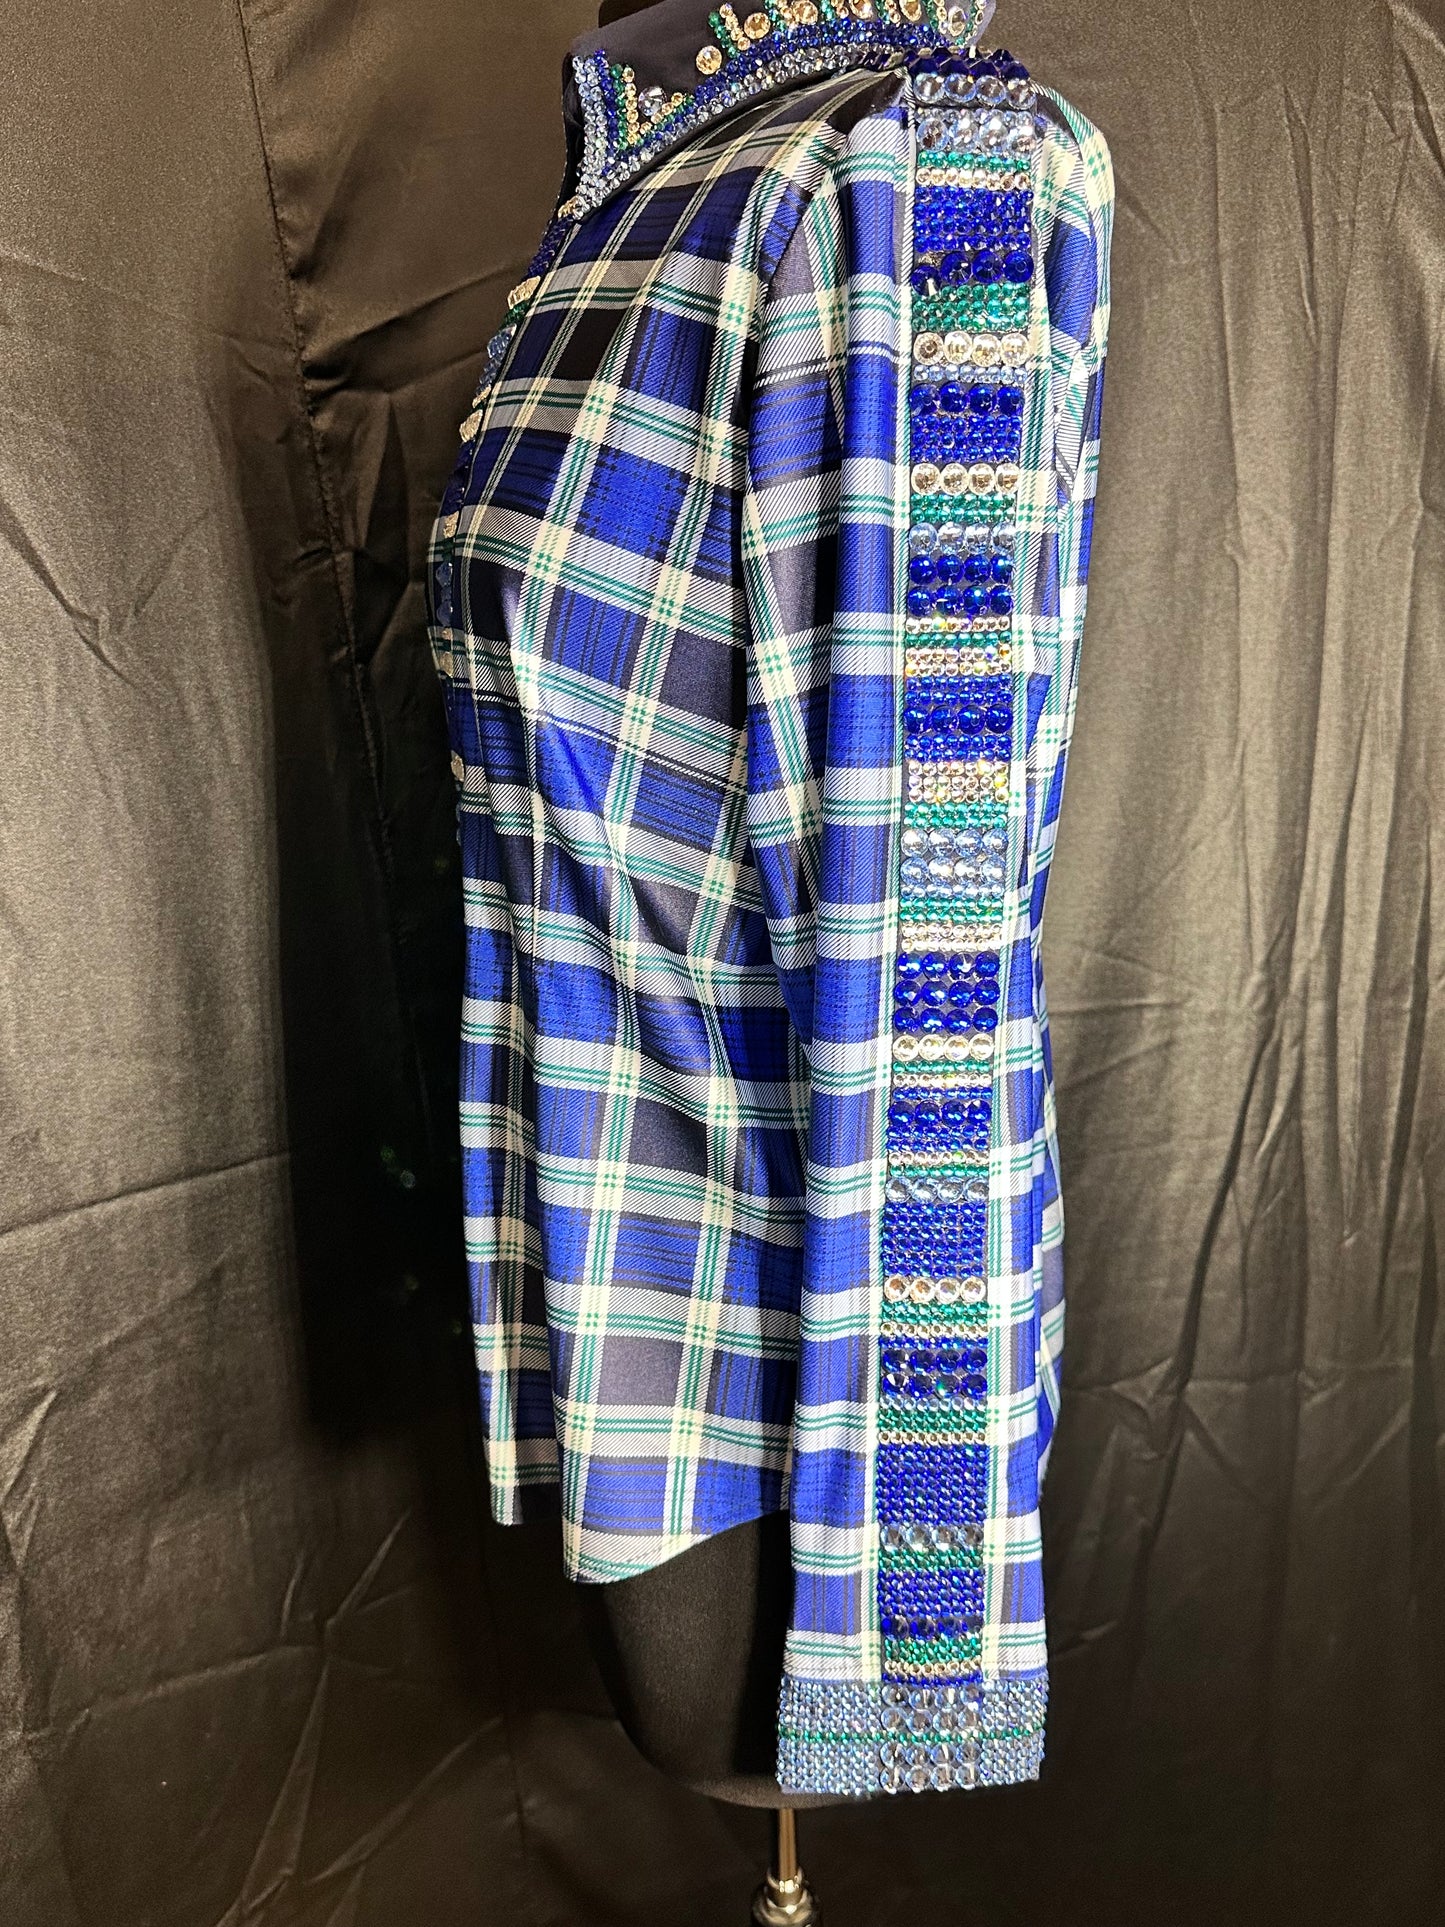 Size large back zip day shirt royal blue plaid